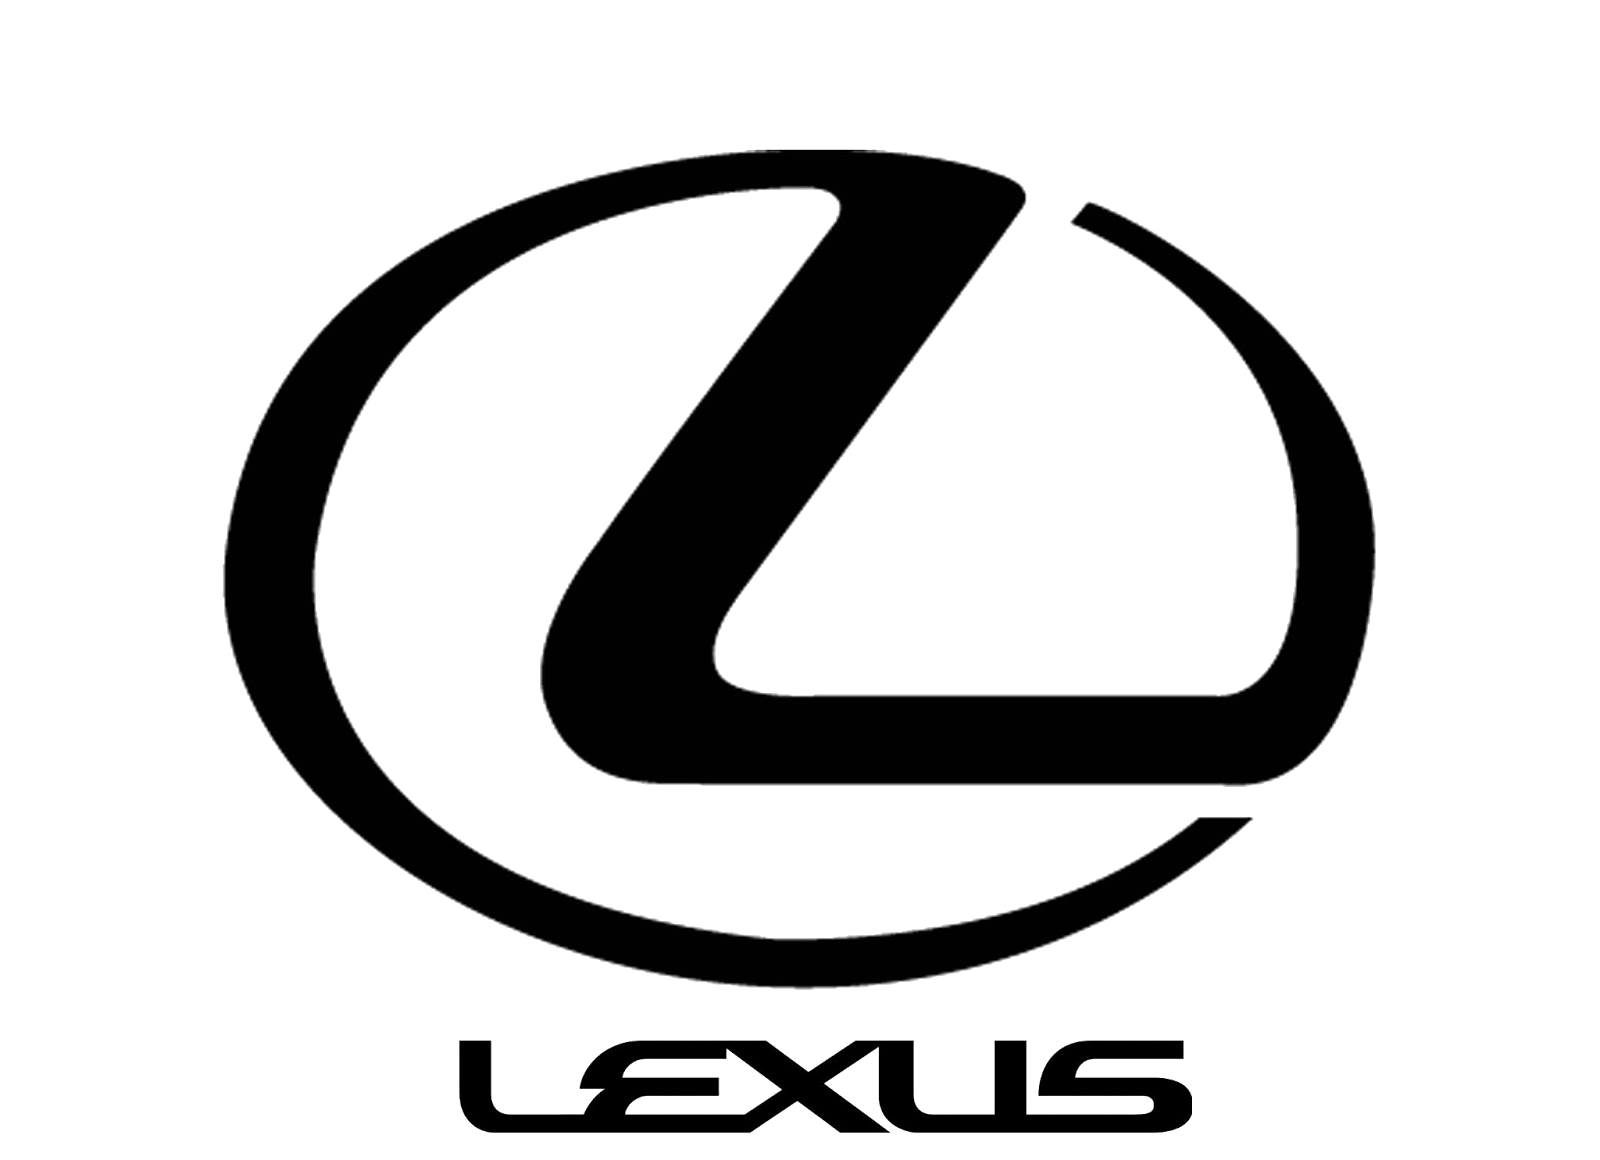 Lexus Logo - Lexus Logo, Lexus Car Symbol Meaning and History. Car Brand Names.com